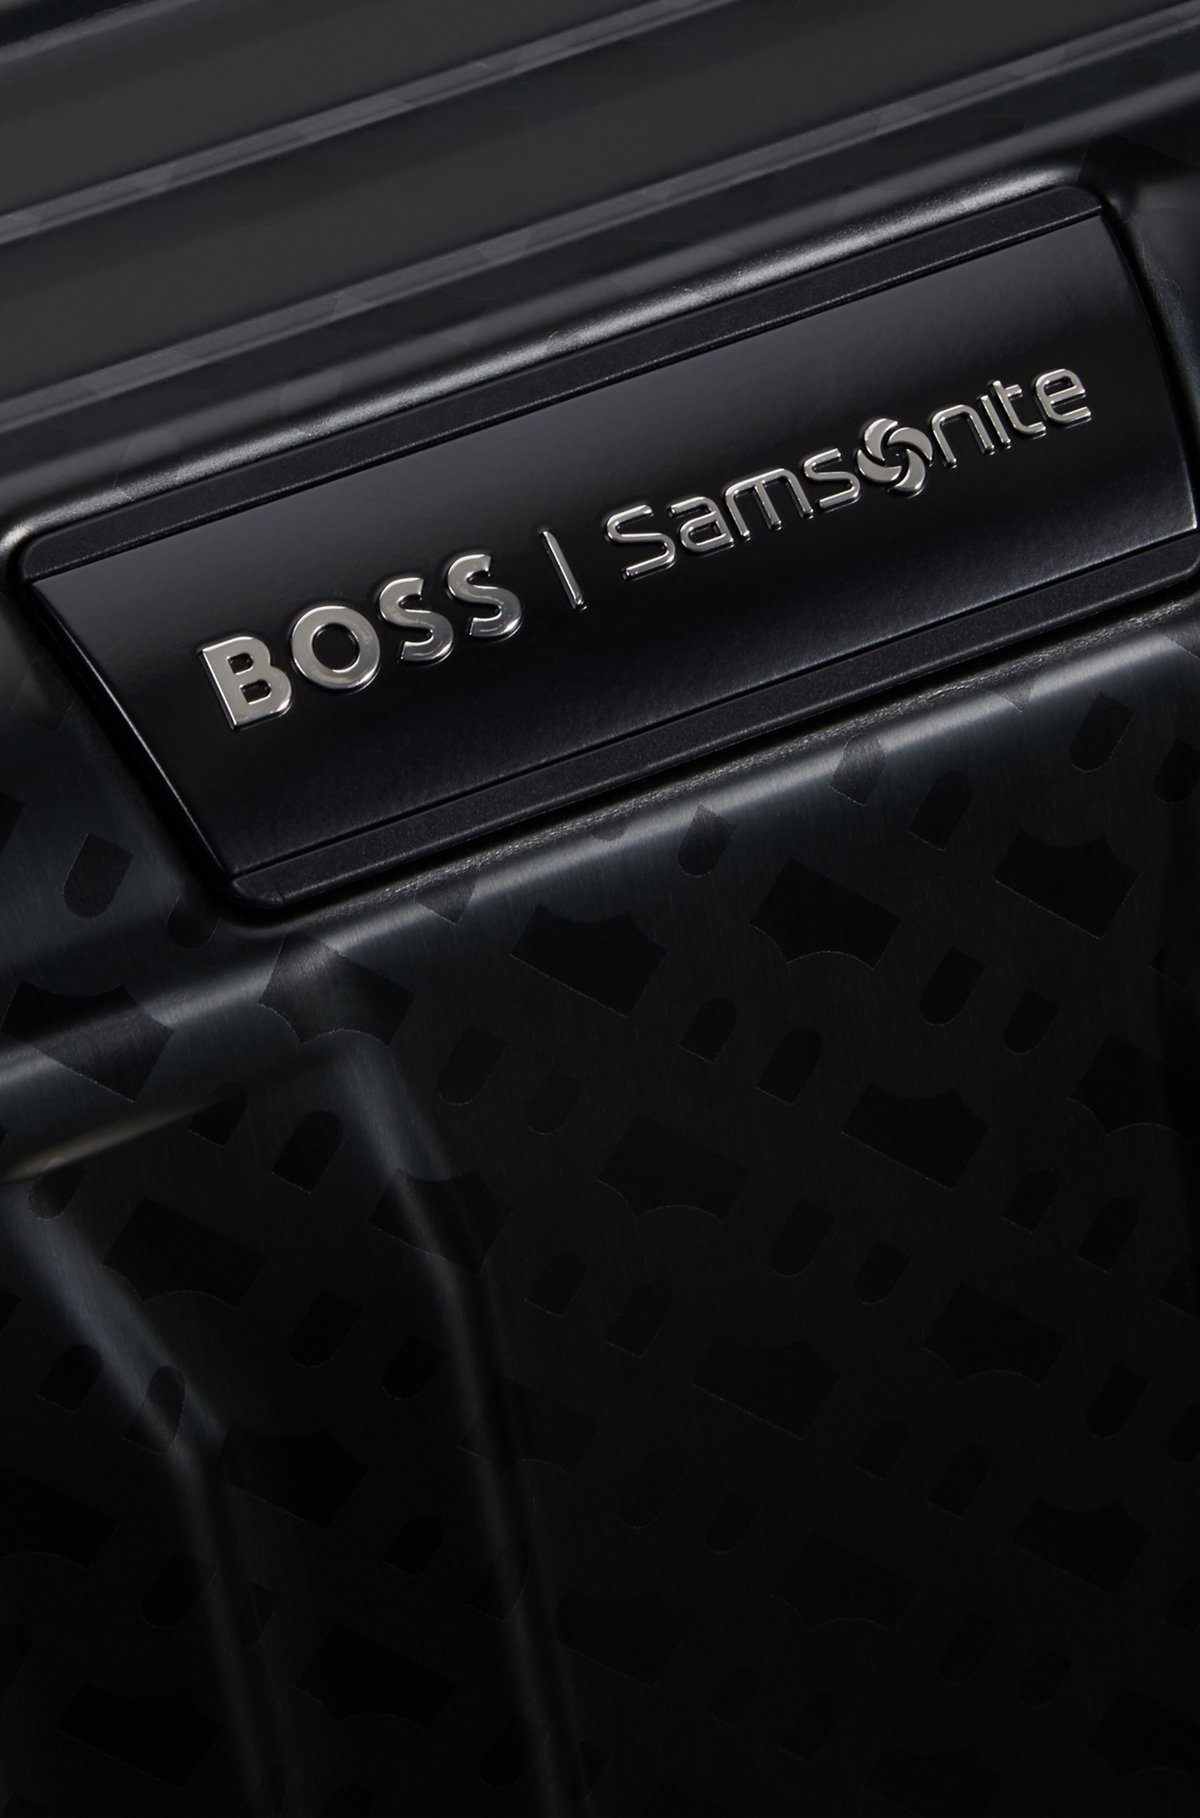 Maleta BOSS | Samsonite de aluminio anodizado con monogramas, Negro